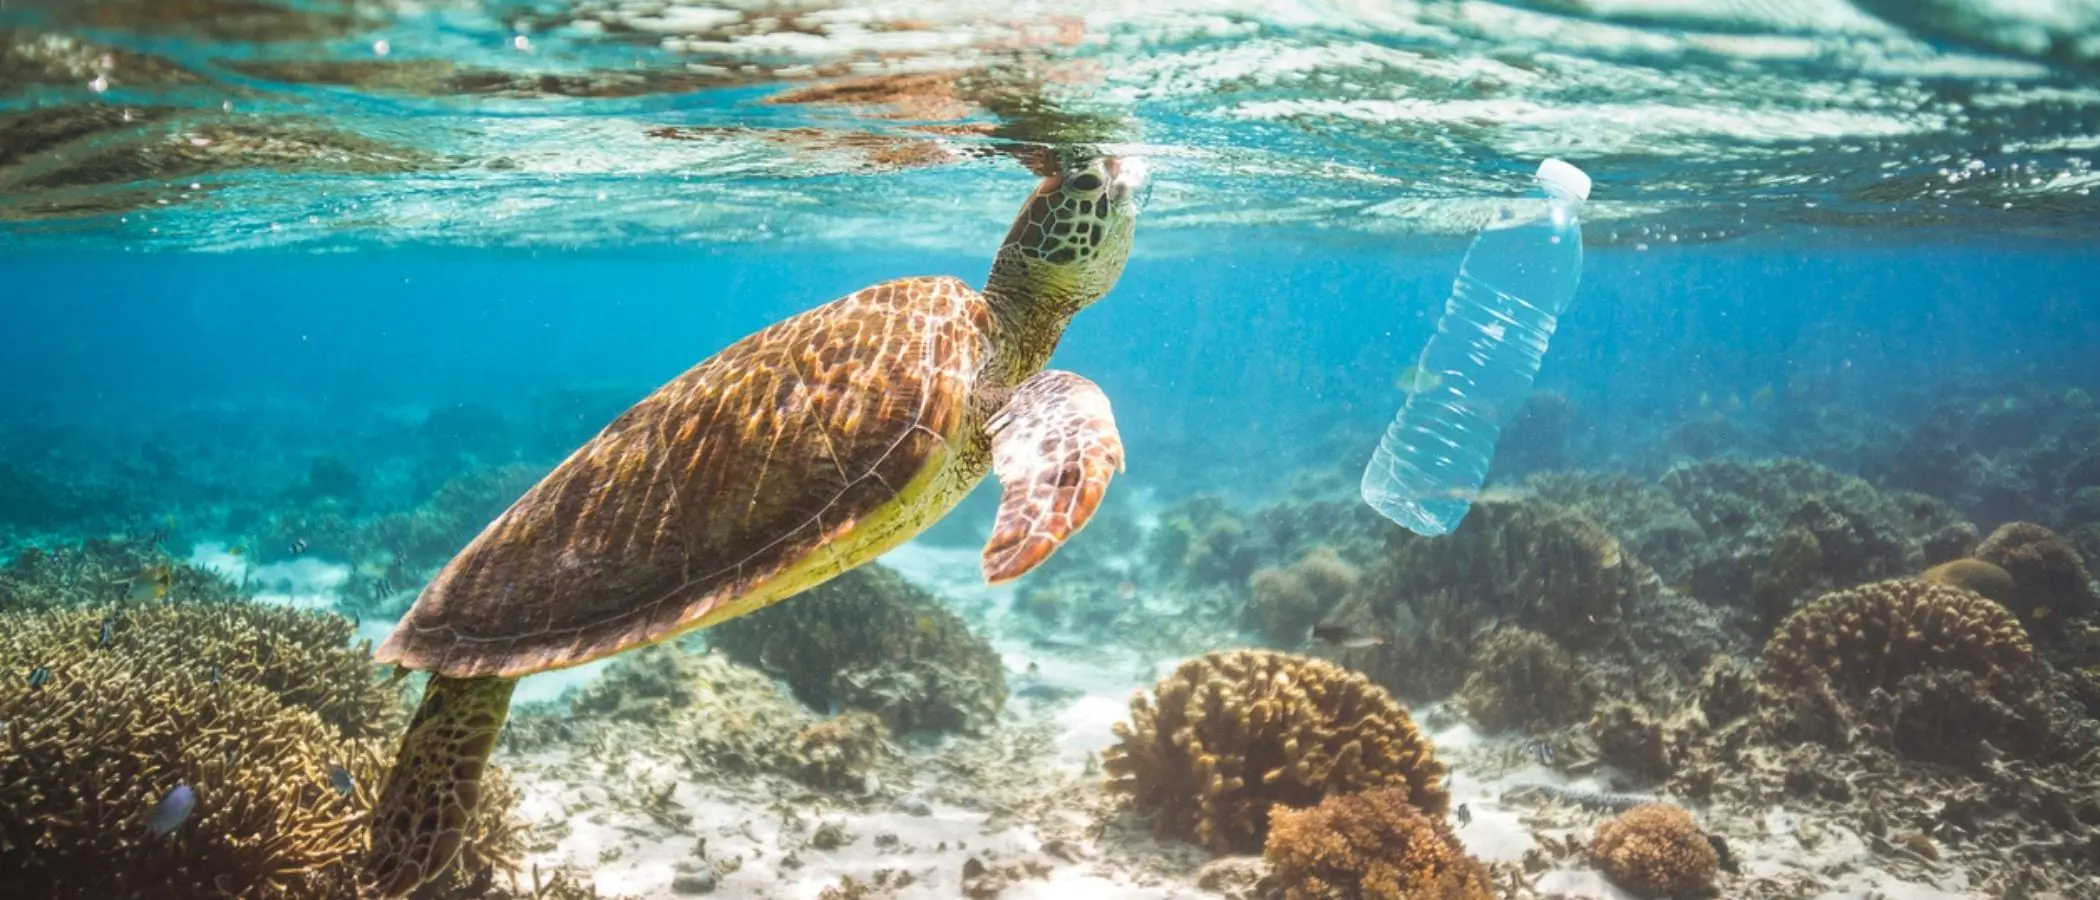 Turtle in ocean next to plastic bottle